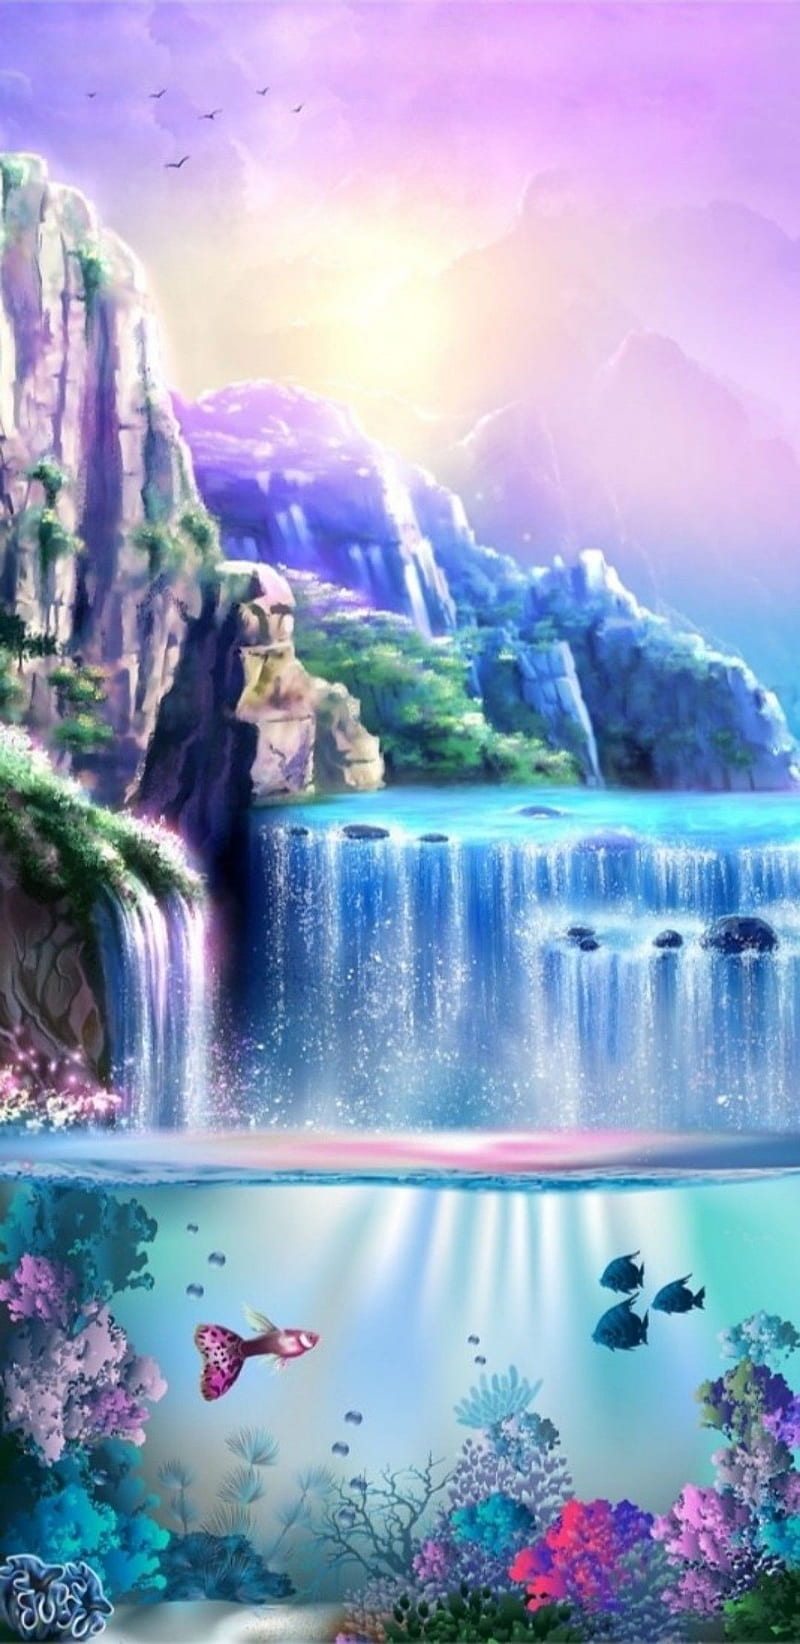 Beautiful Waterfall Wallpaper Iphone